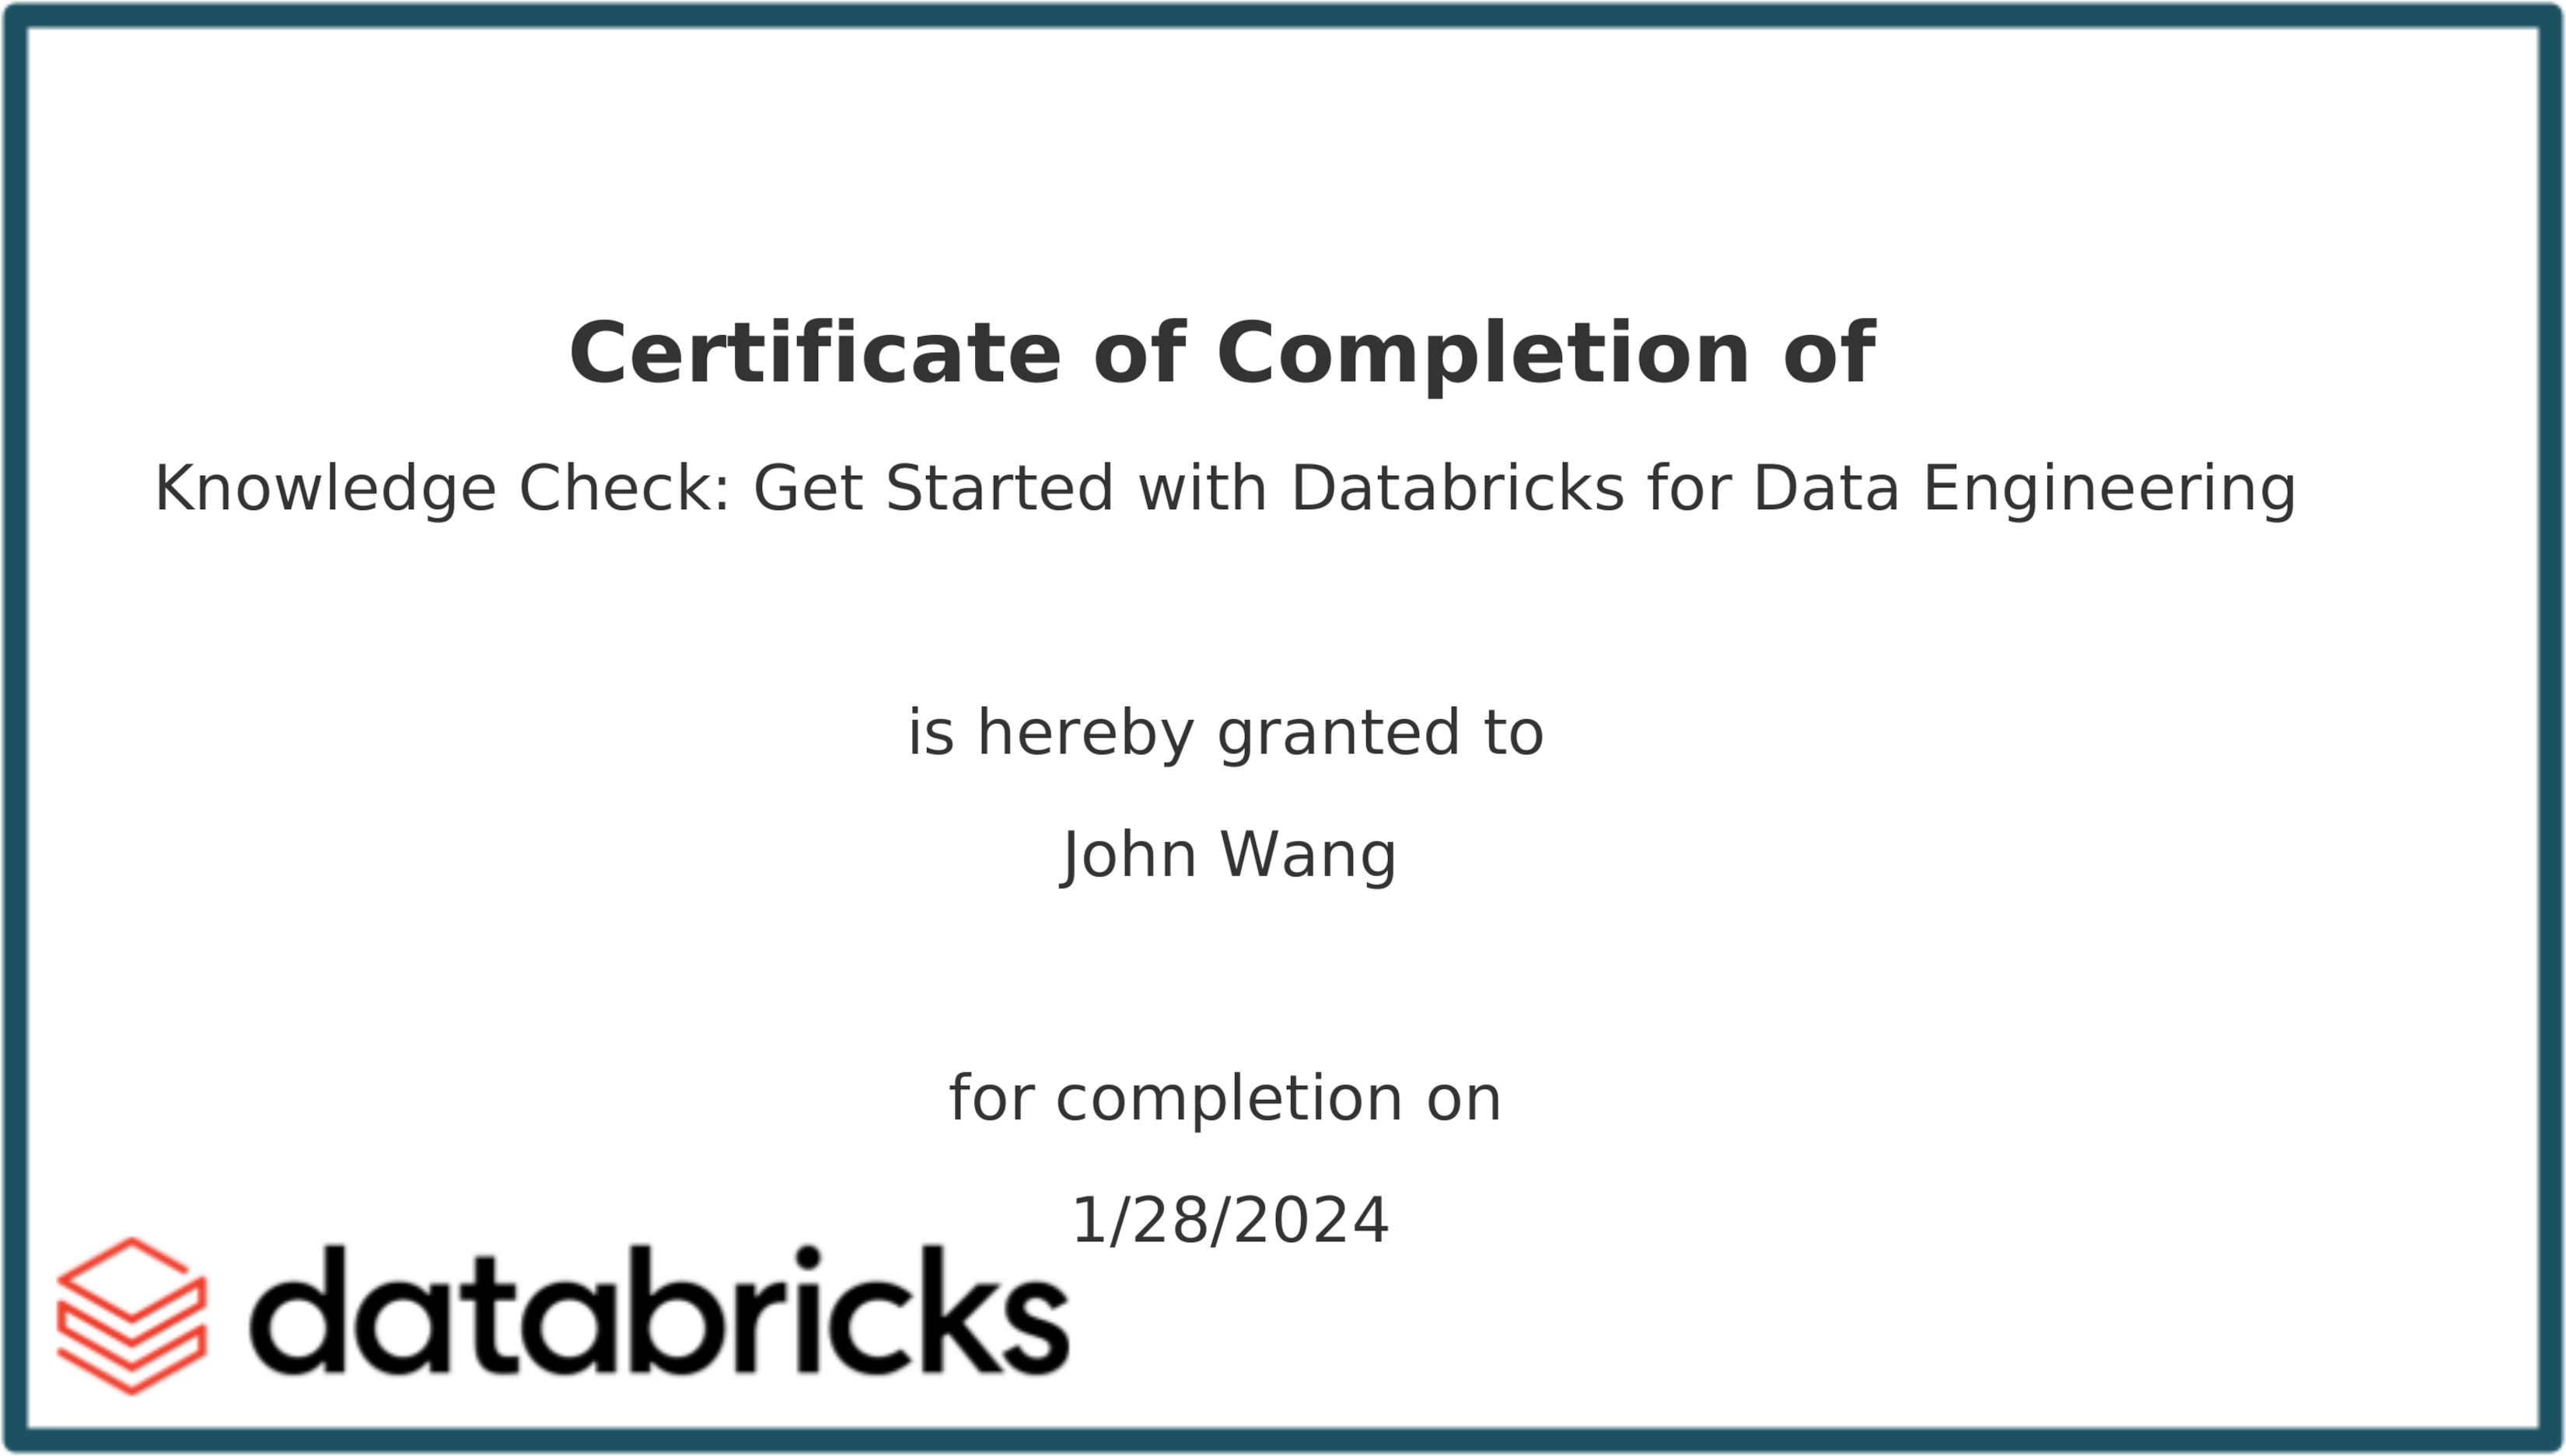 John's Get Started with Databricks for Data Engineering from Databricks